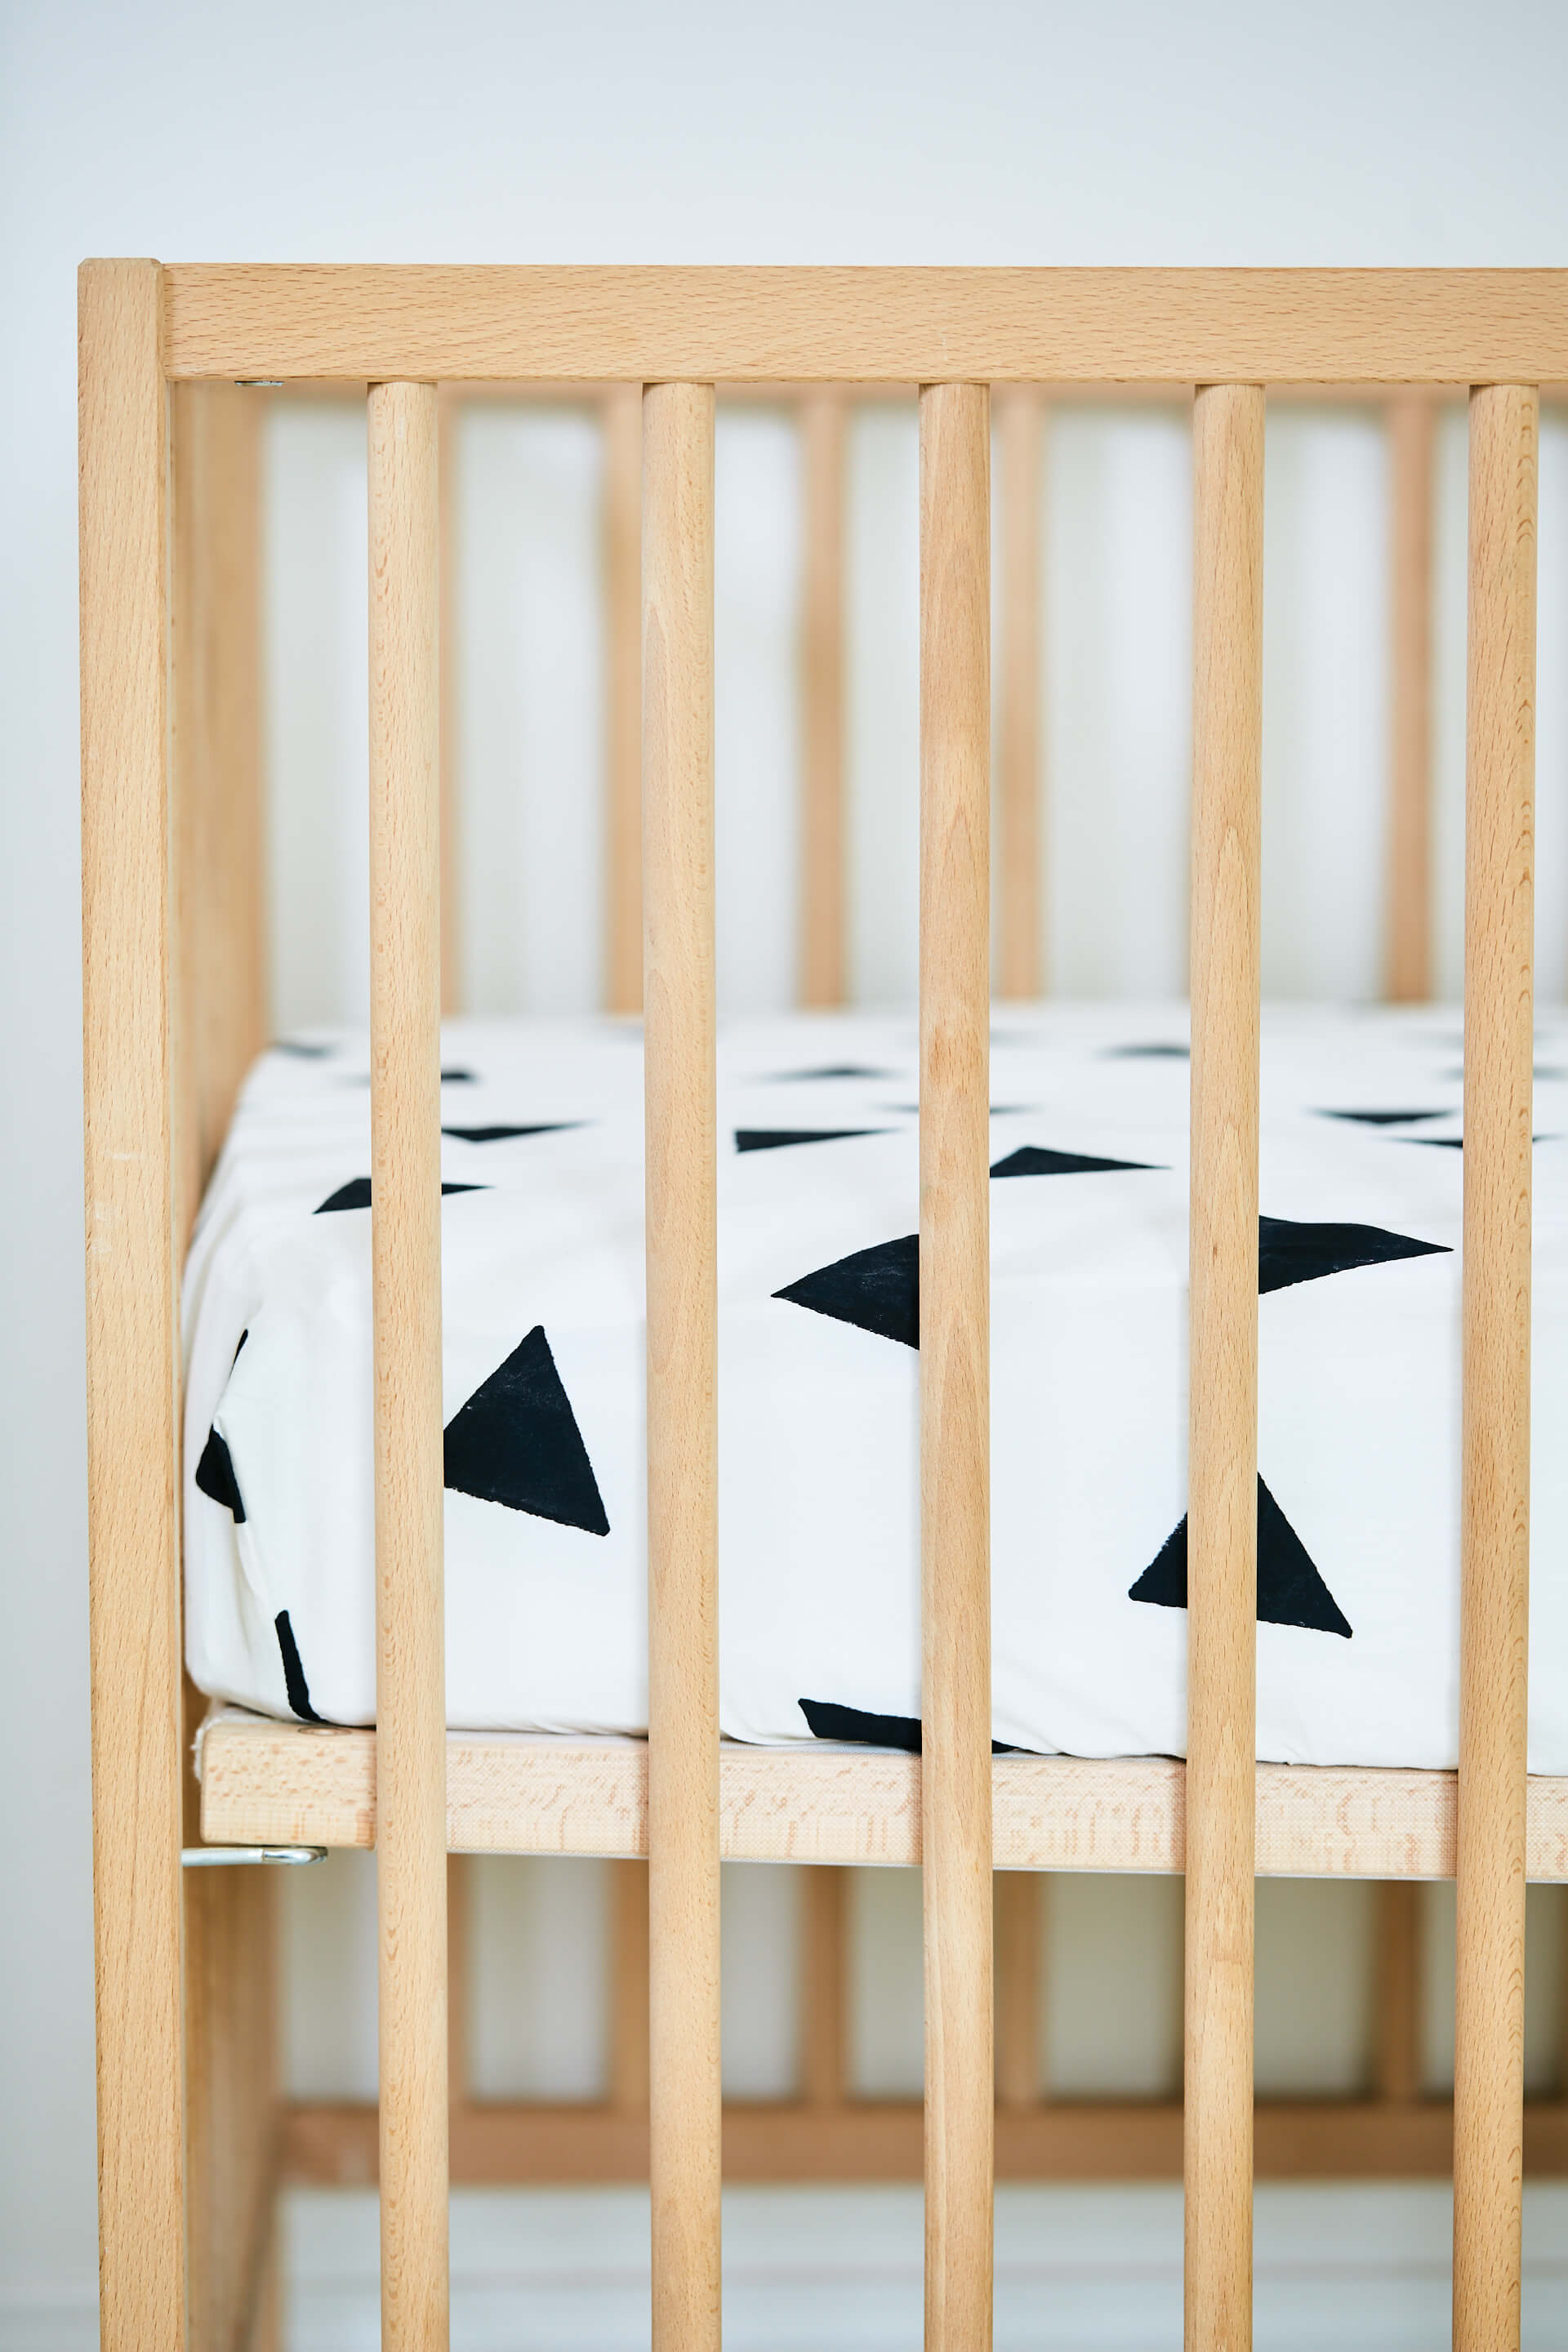 Kindred Kid & Baby Organic Cotton Triangle Crib Sheet
Jungle Pillows